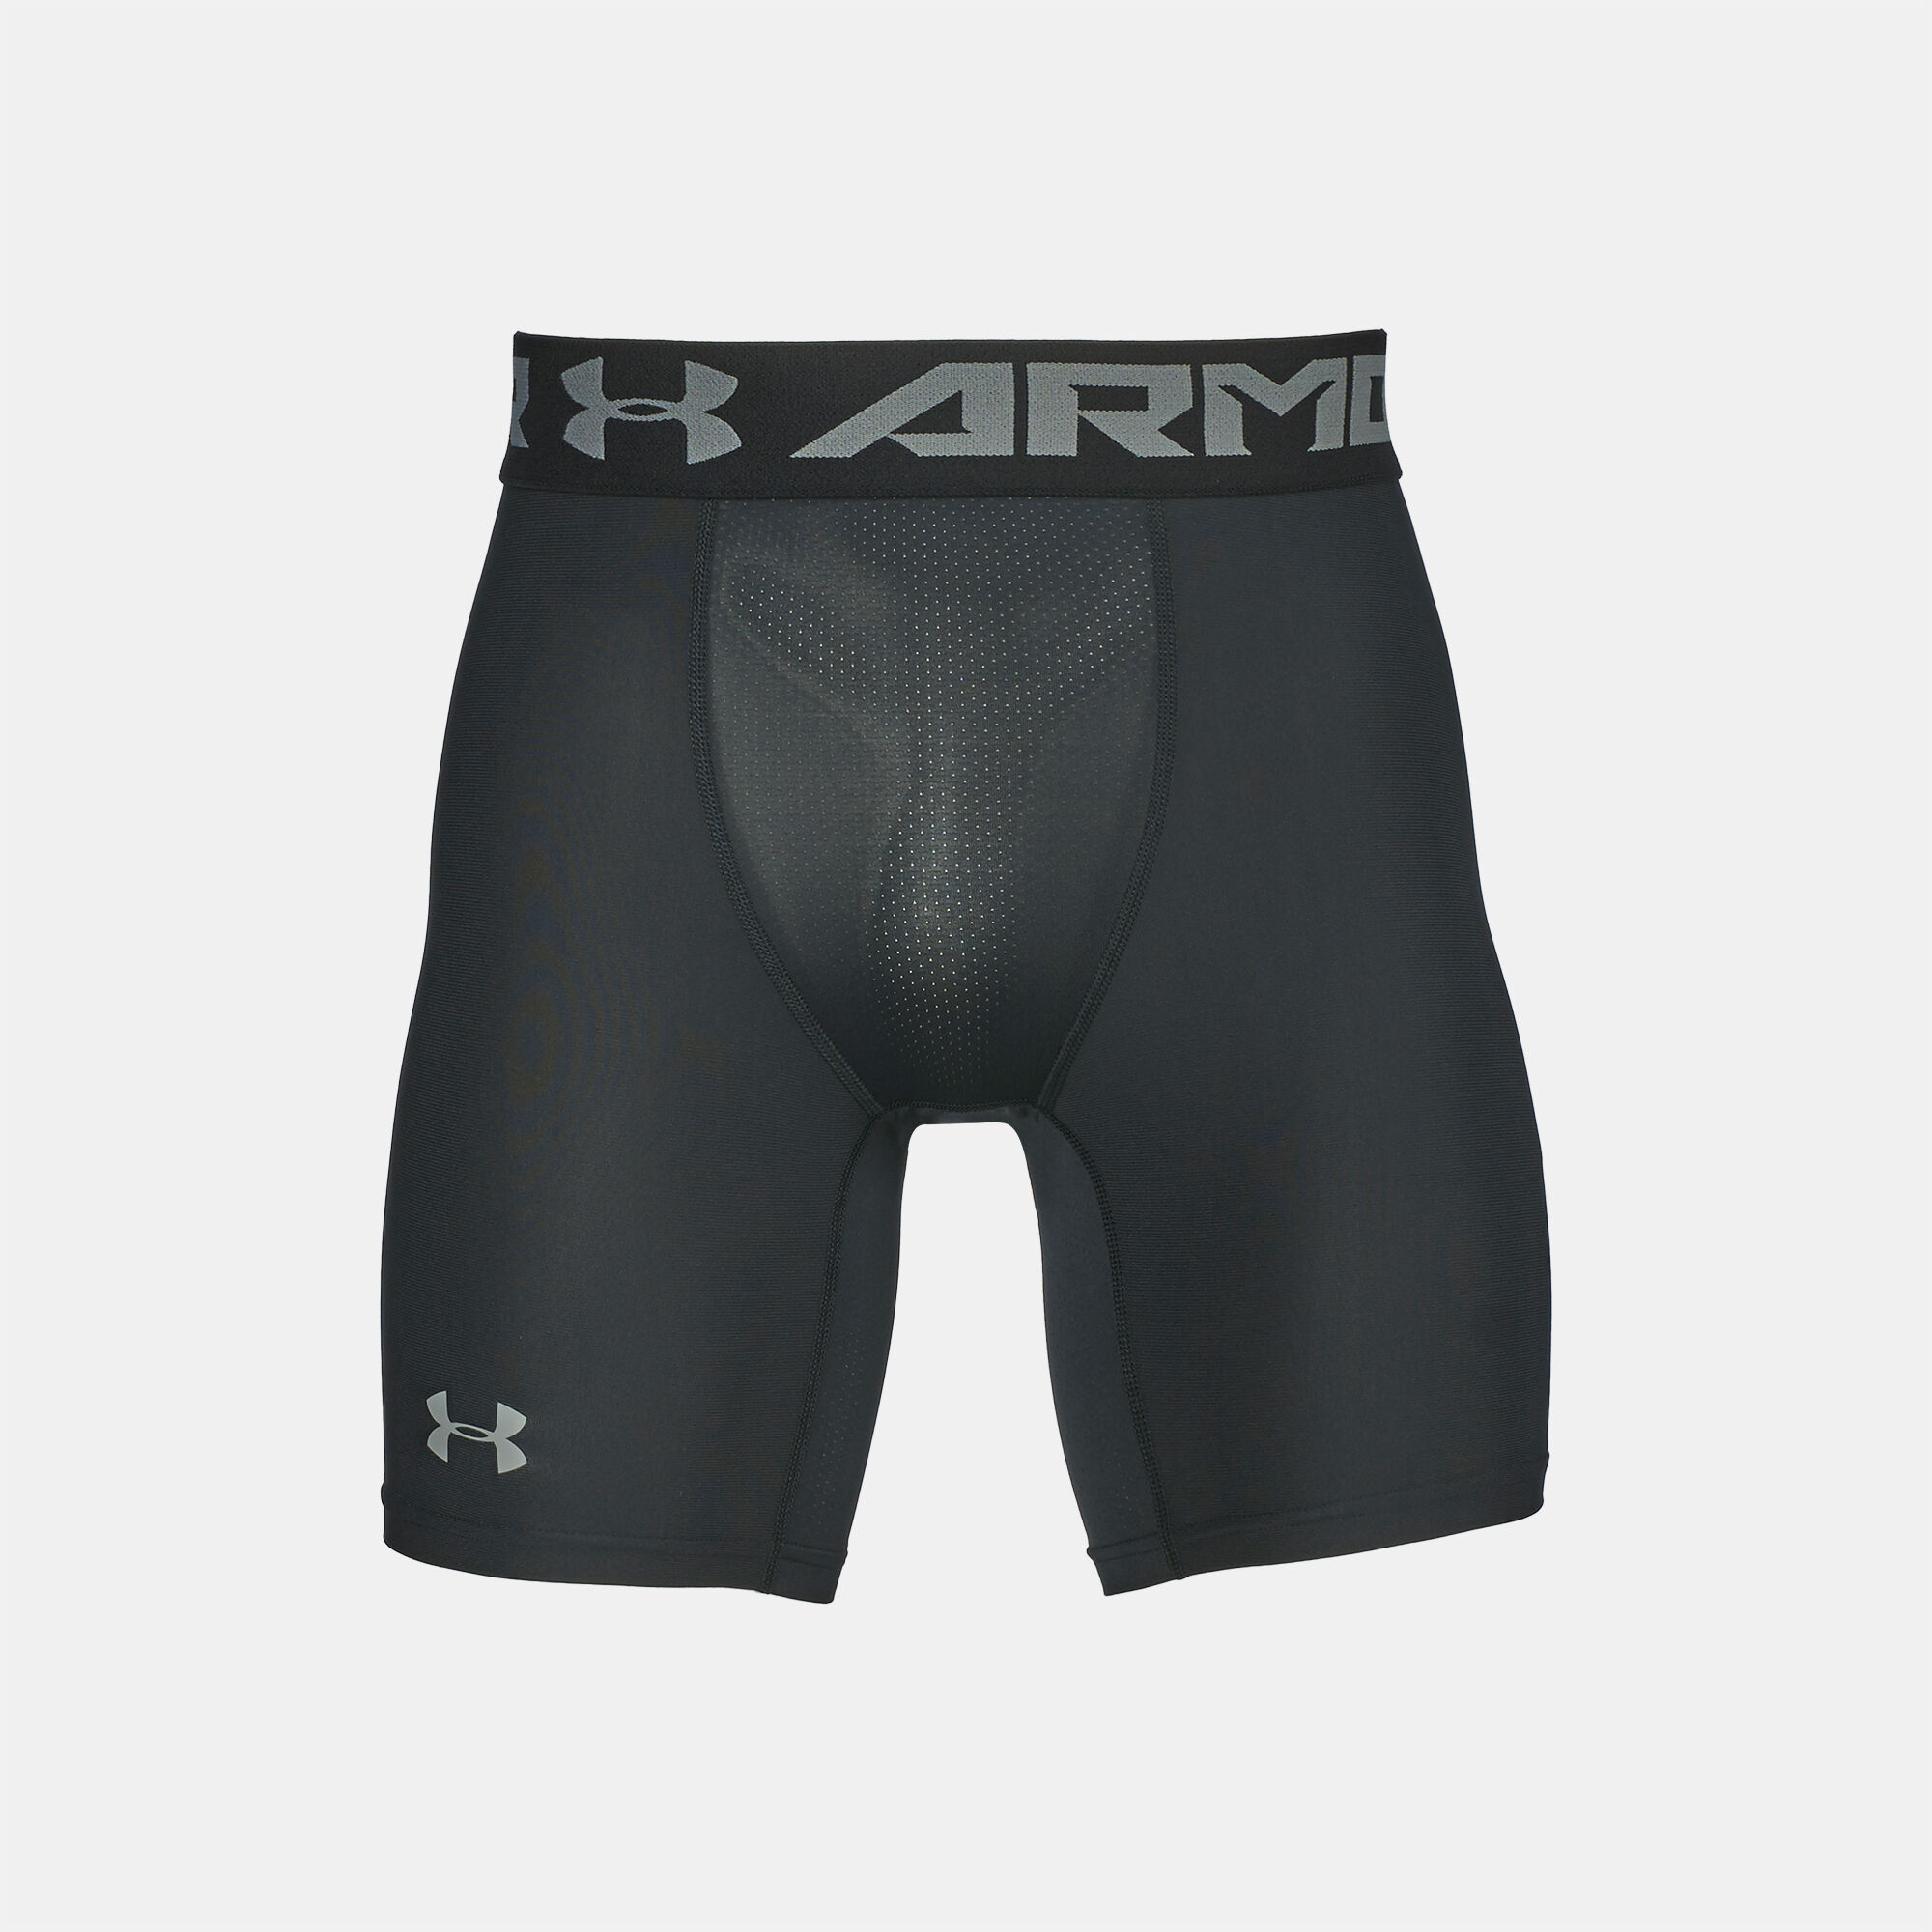 Under Armour, Underwear & Socks, Mens Under Armor Compression Shorts